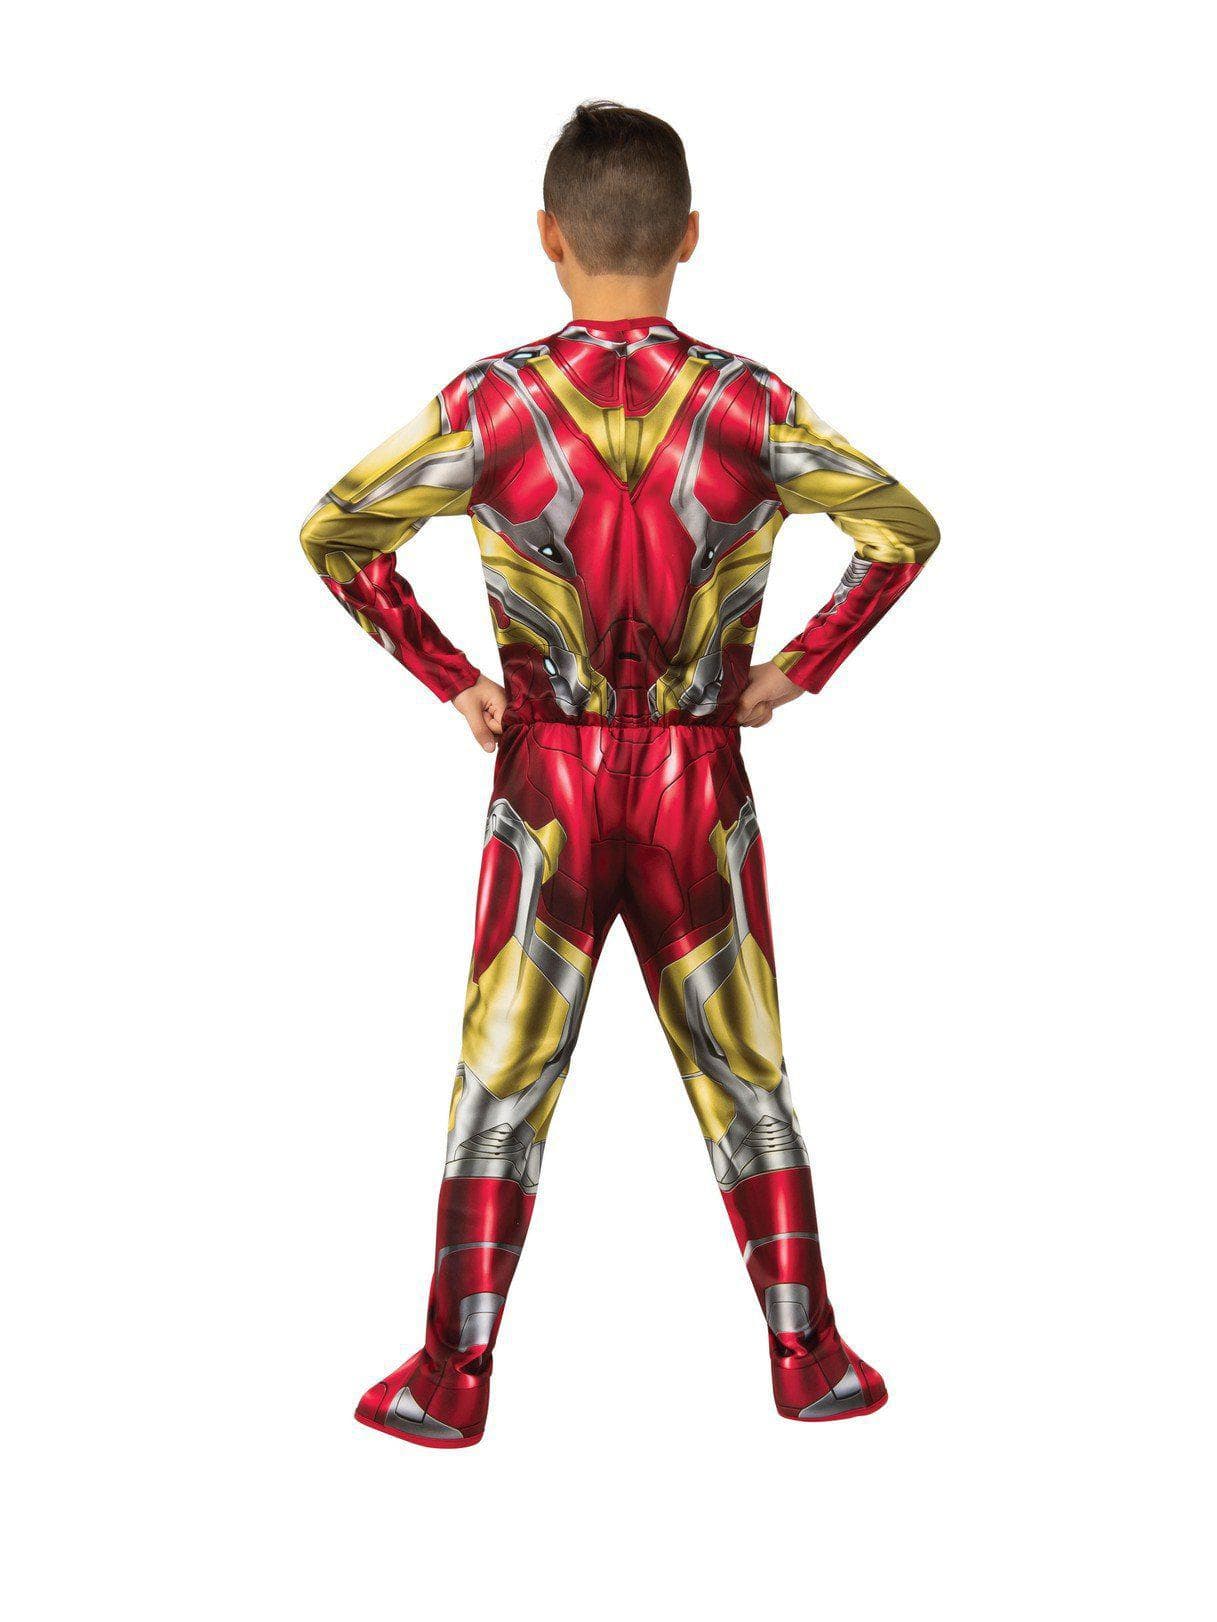 Kids Avengers Iron Man Costume - costumes.com